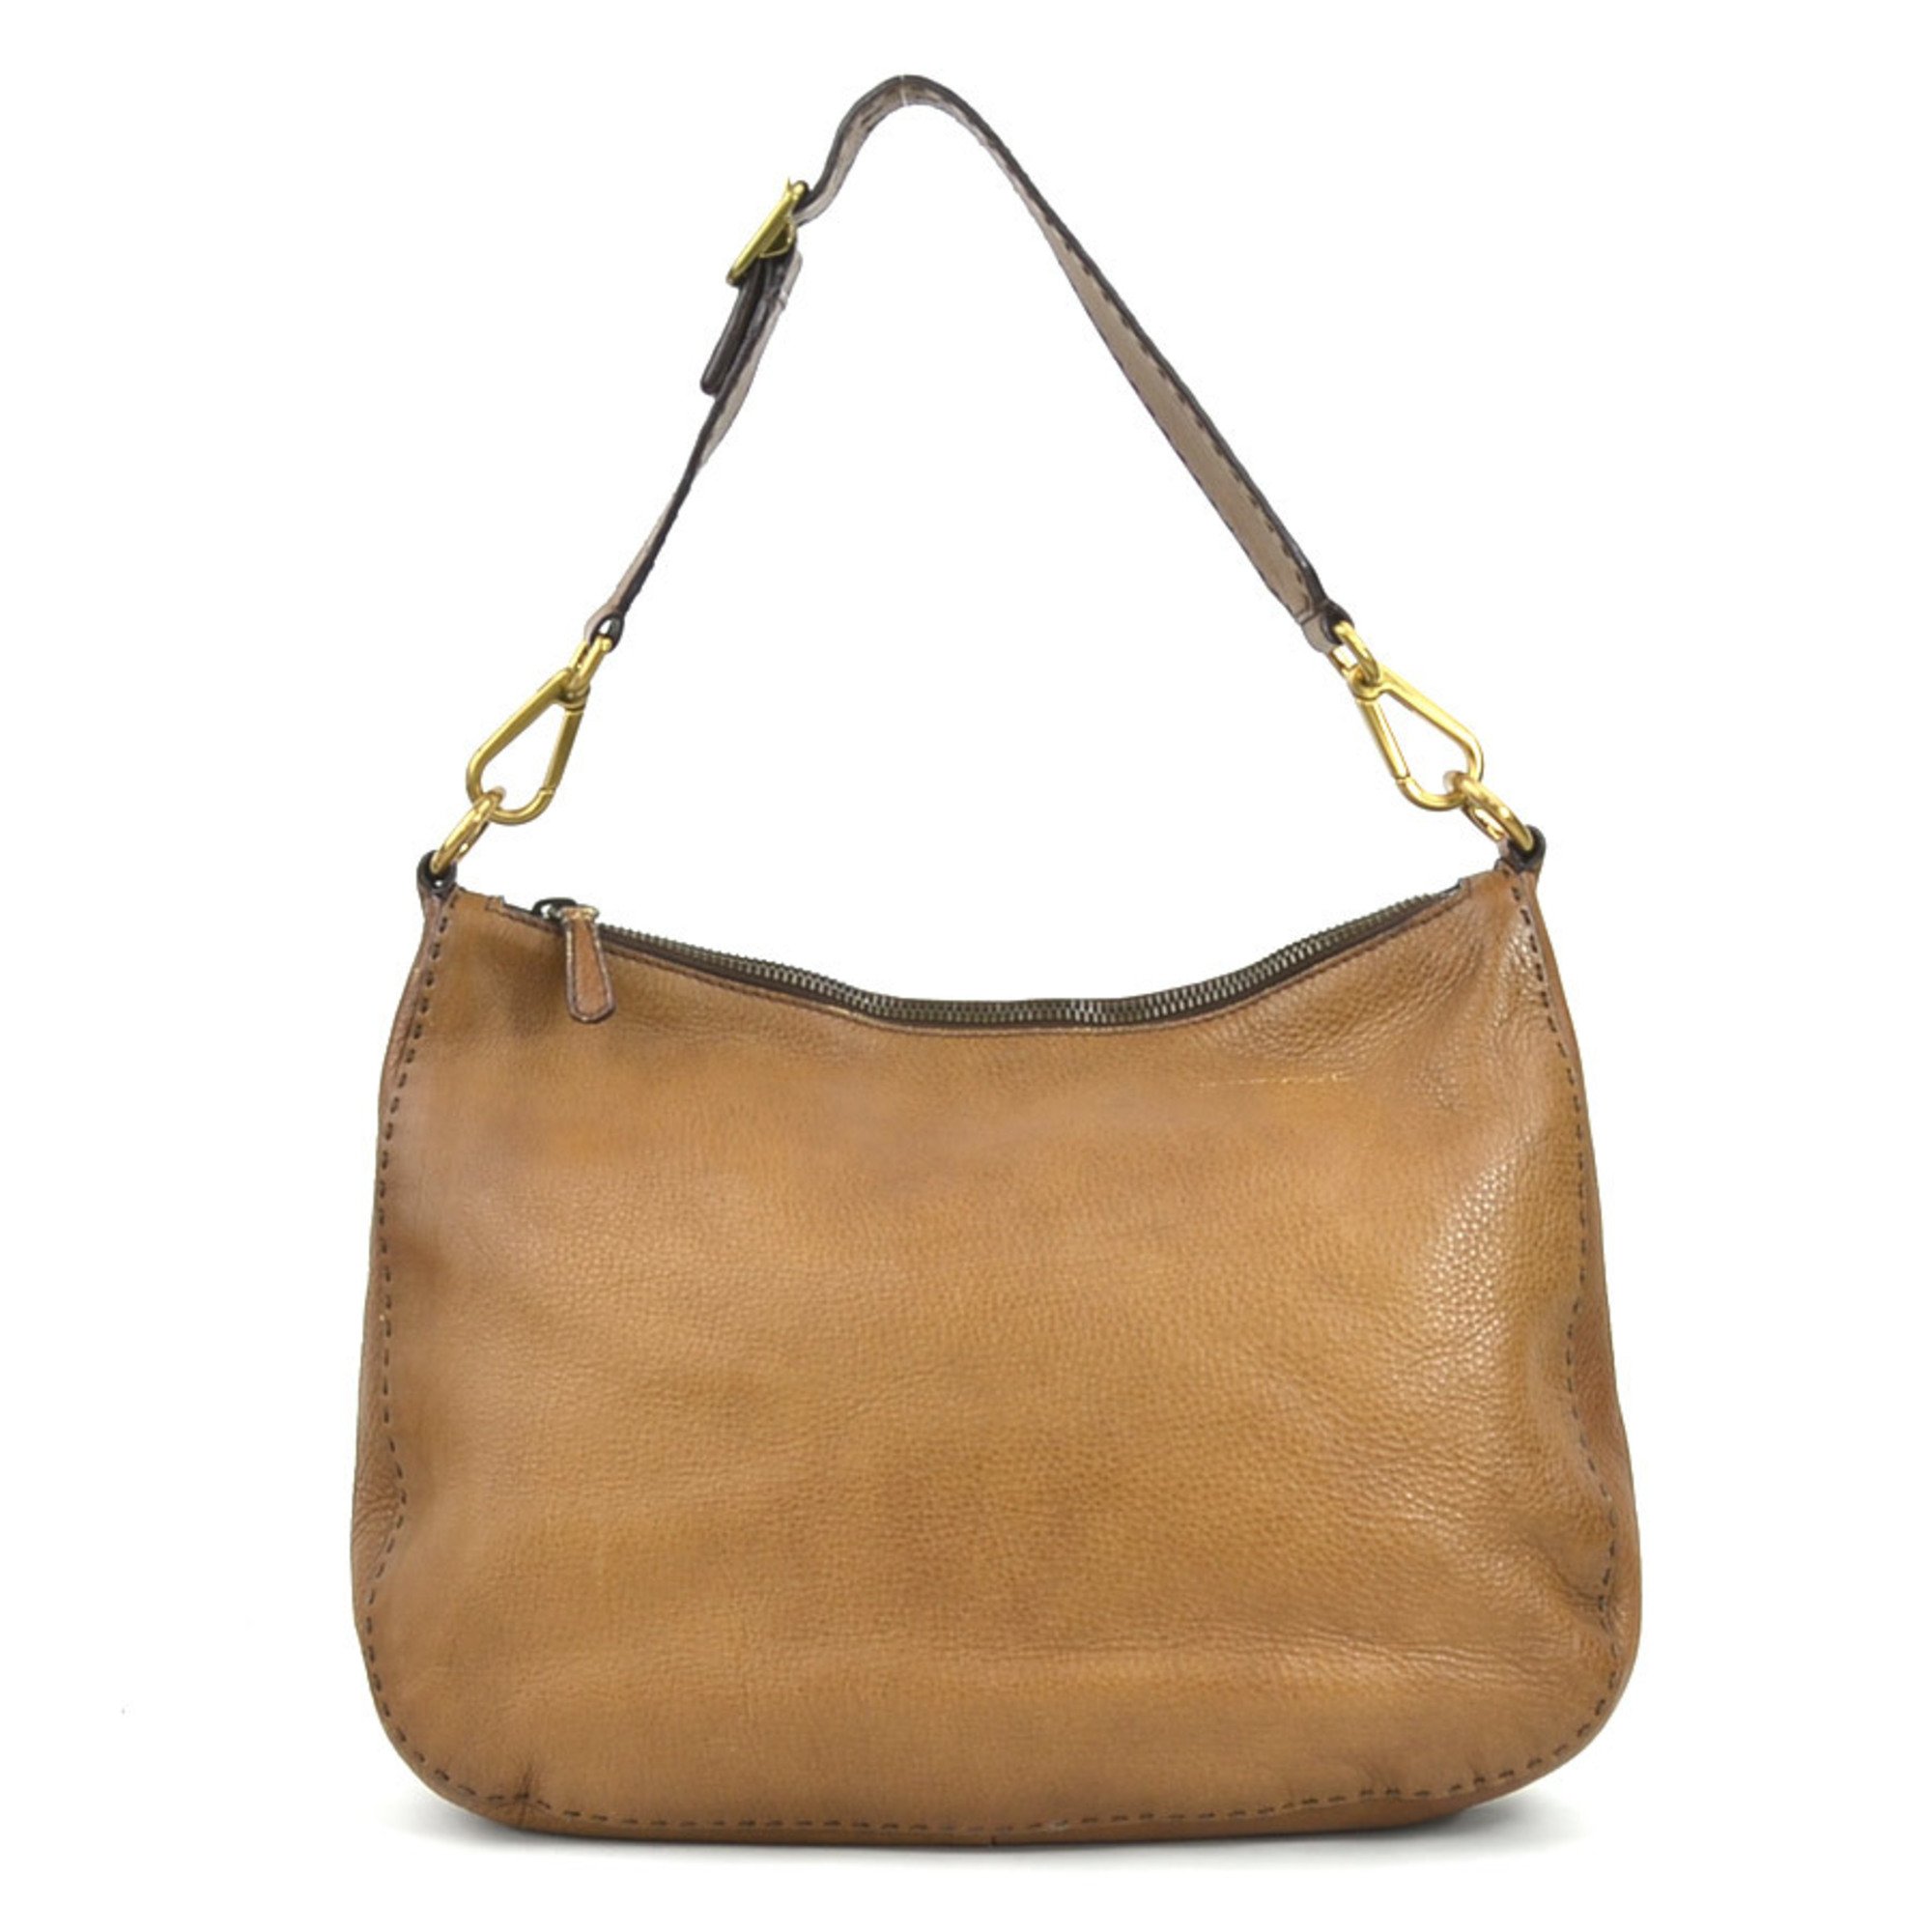 PRADA shoulder bag leather brown gold women's e58765a